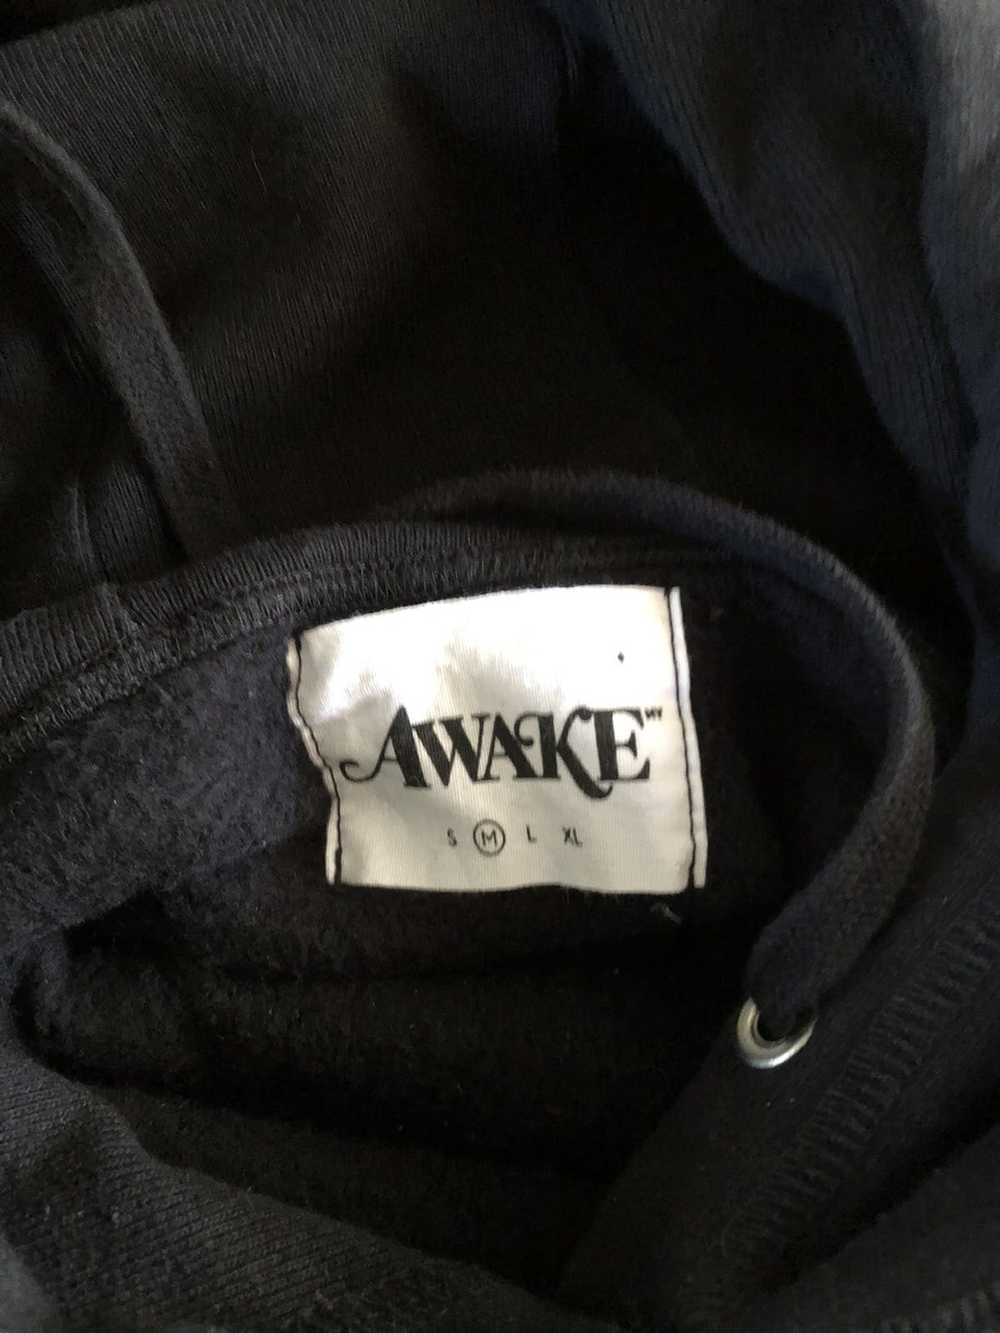 Awake Awake x dover street market LA 2018 - image 2